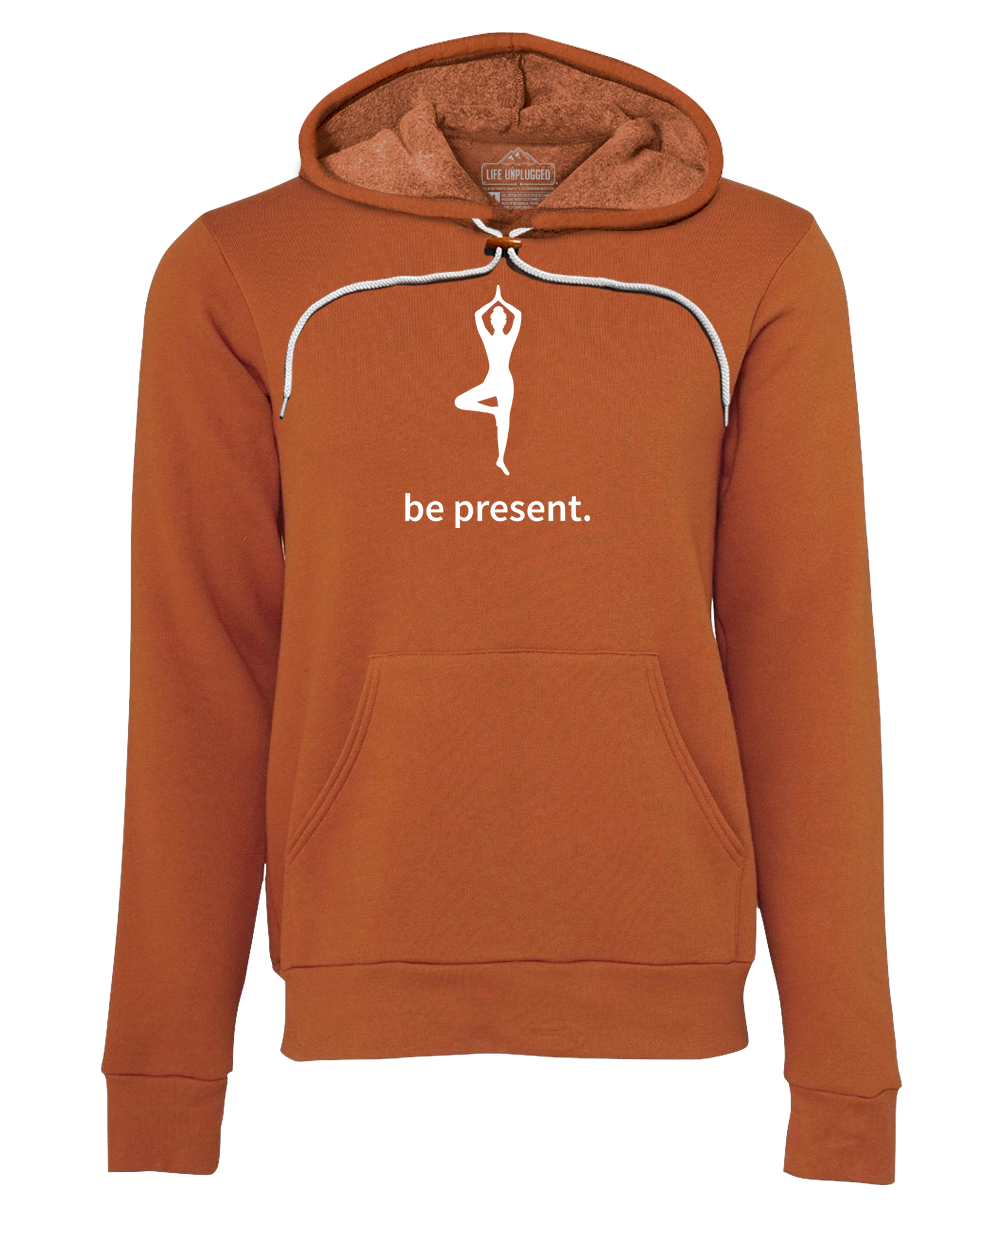 Yoga Premium Super Soft Hooded Sweatshirt